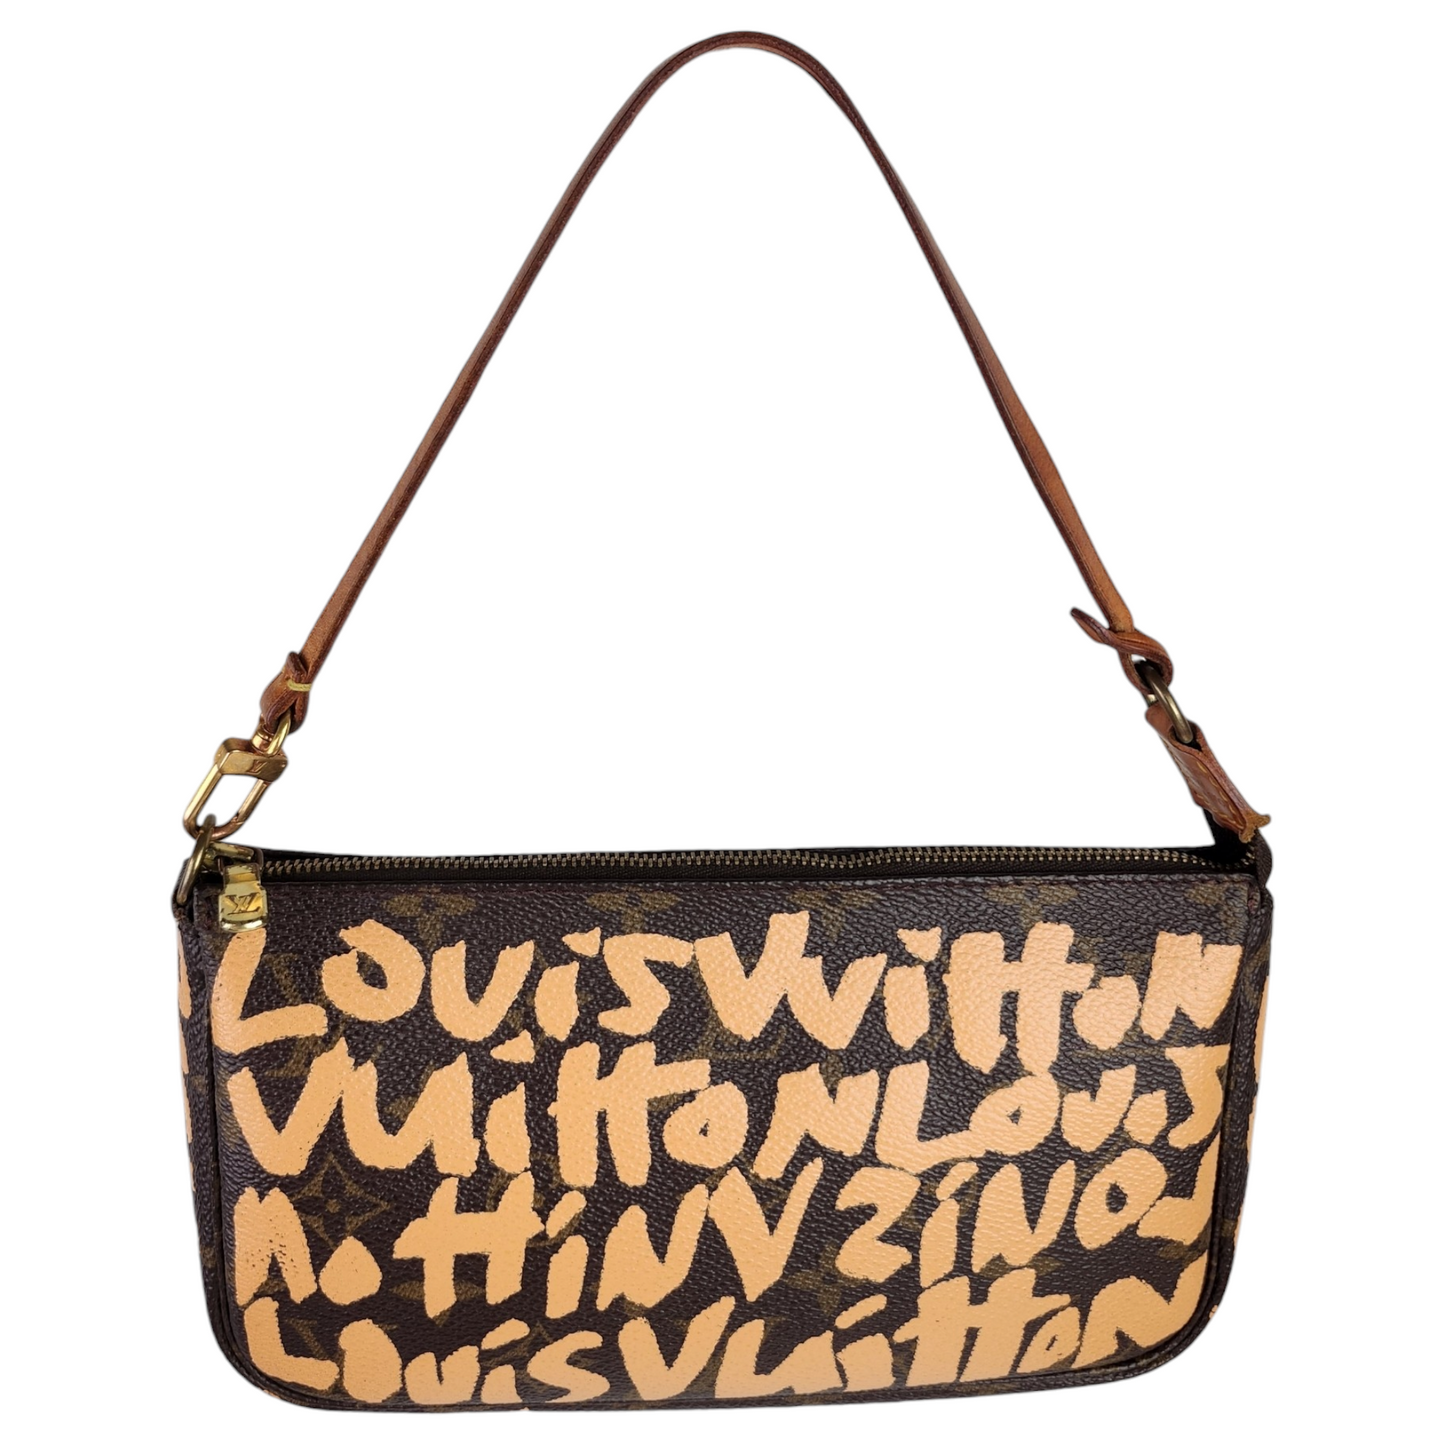 Louis Vuitton Limited Edition Stephen Sprouse Graffiti Pochette Bag